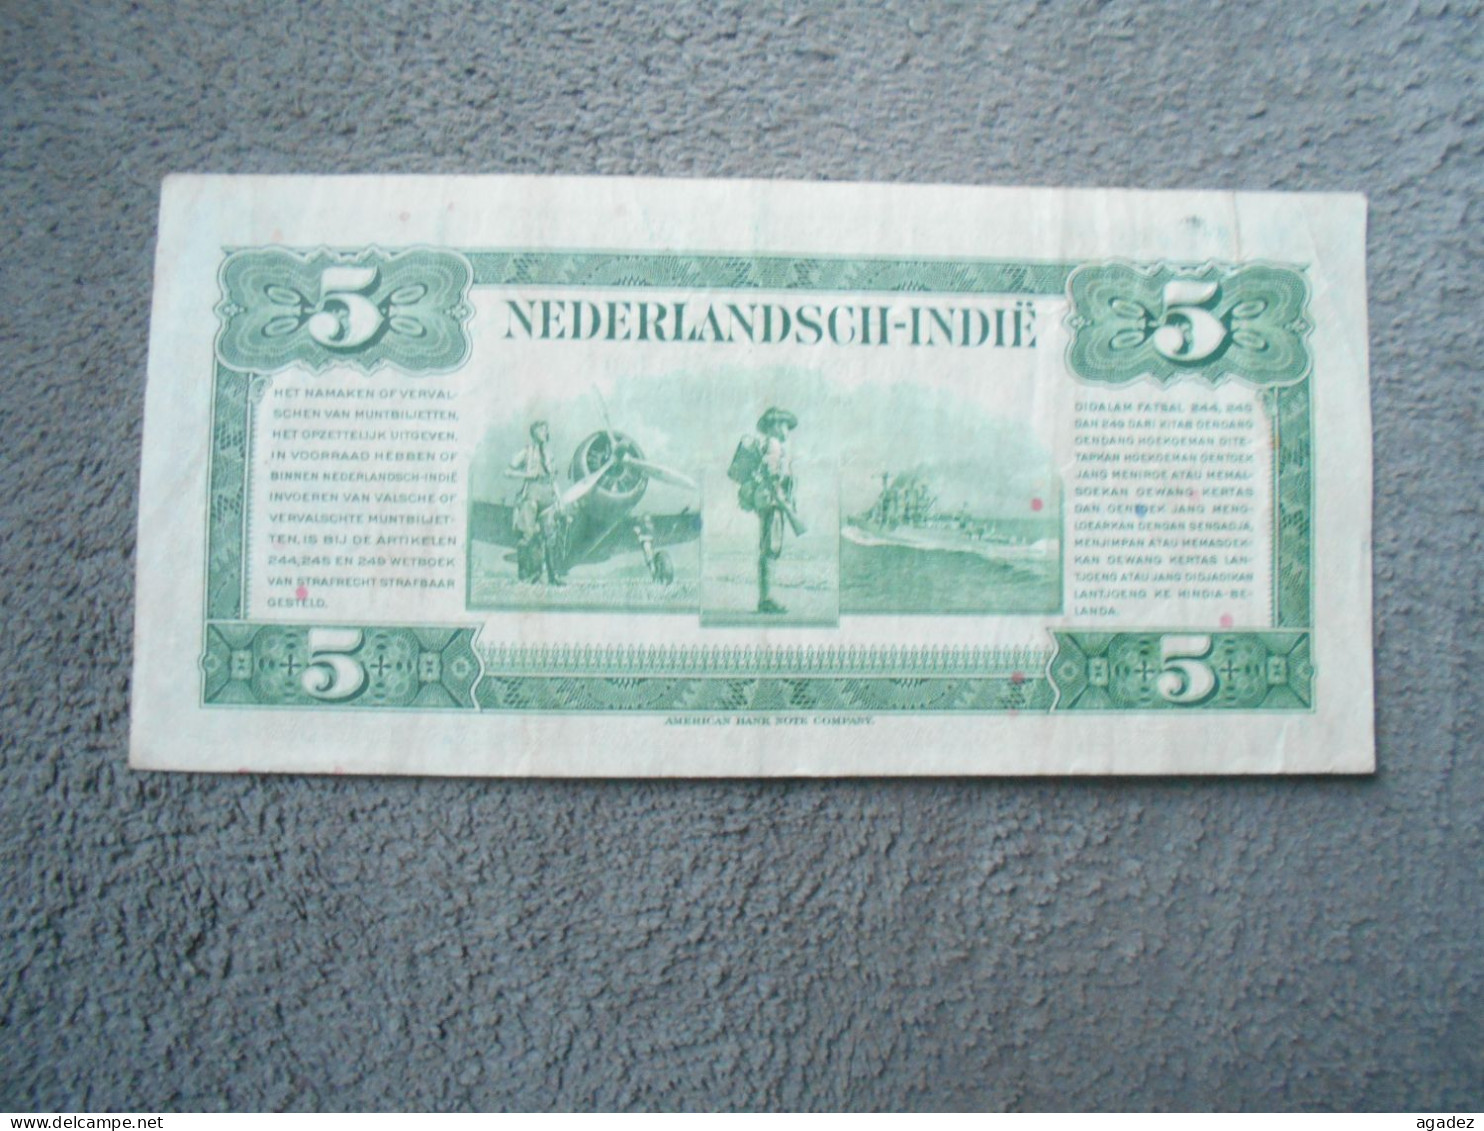 Ancien Billet De Banque Nederlandsch Indie Indes Neerlandaises  5 Gulden 1943 - India